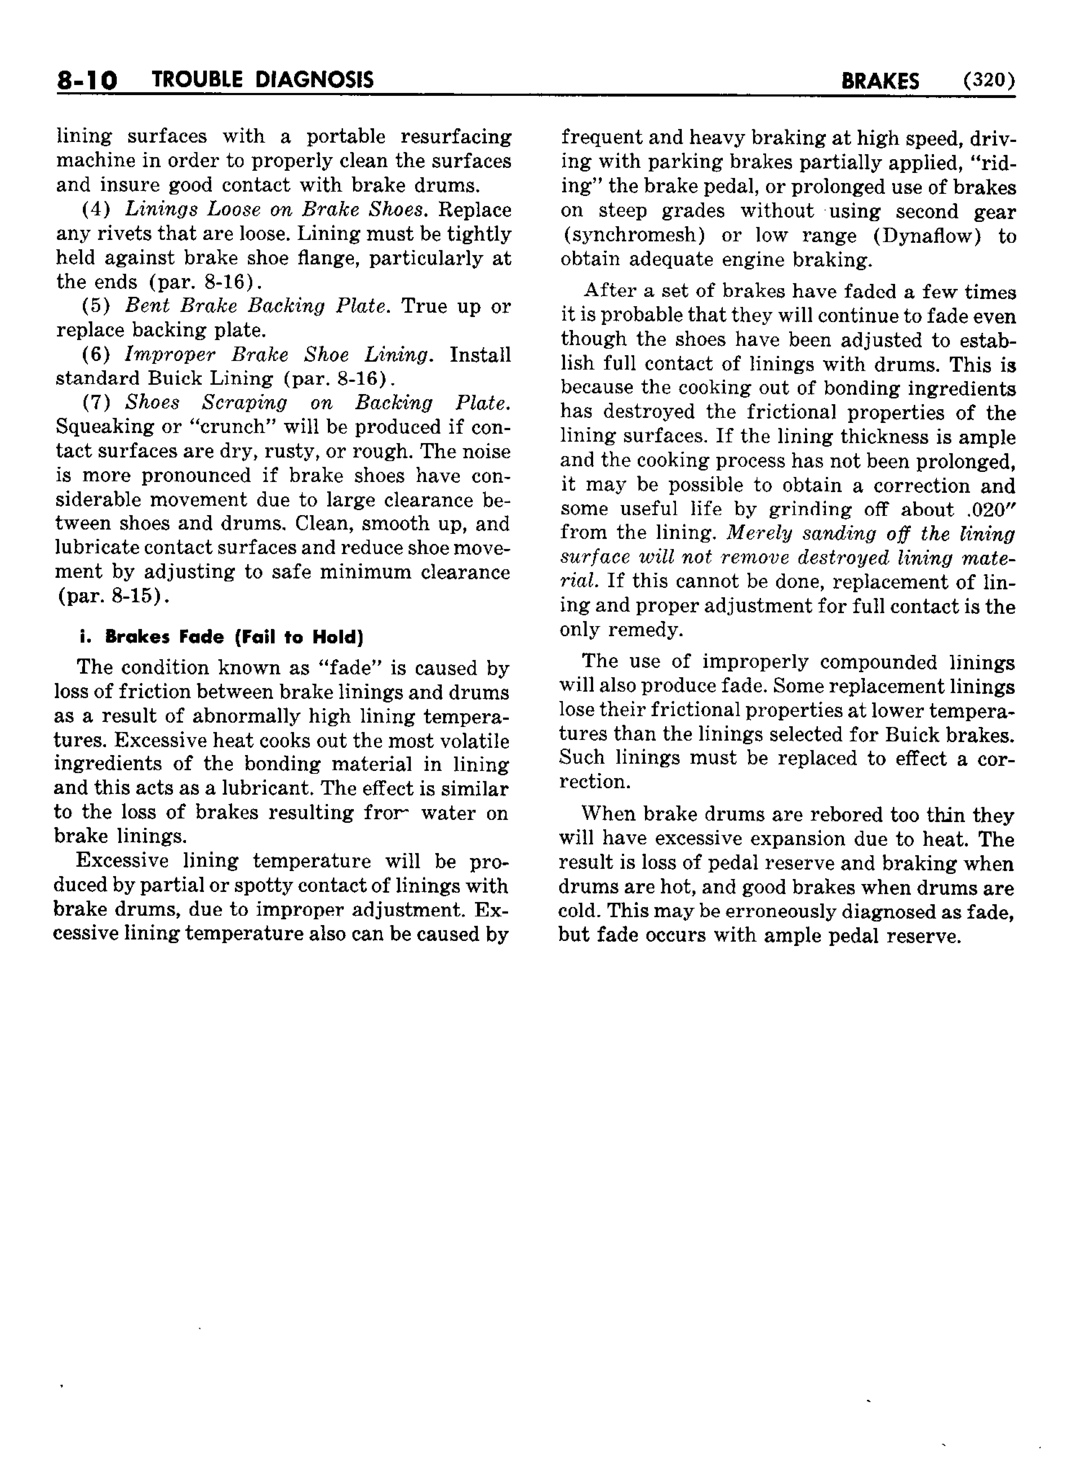 n_09 1952 Buick Shop Manual - Brakes-010-010.jpg